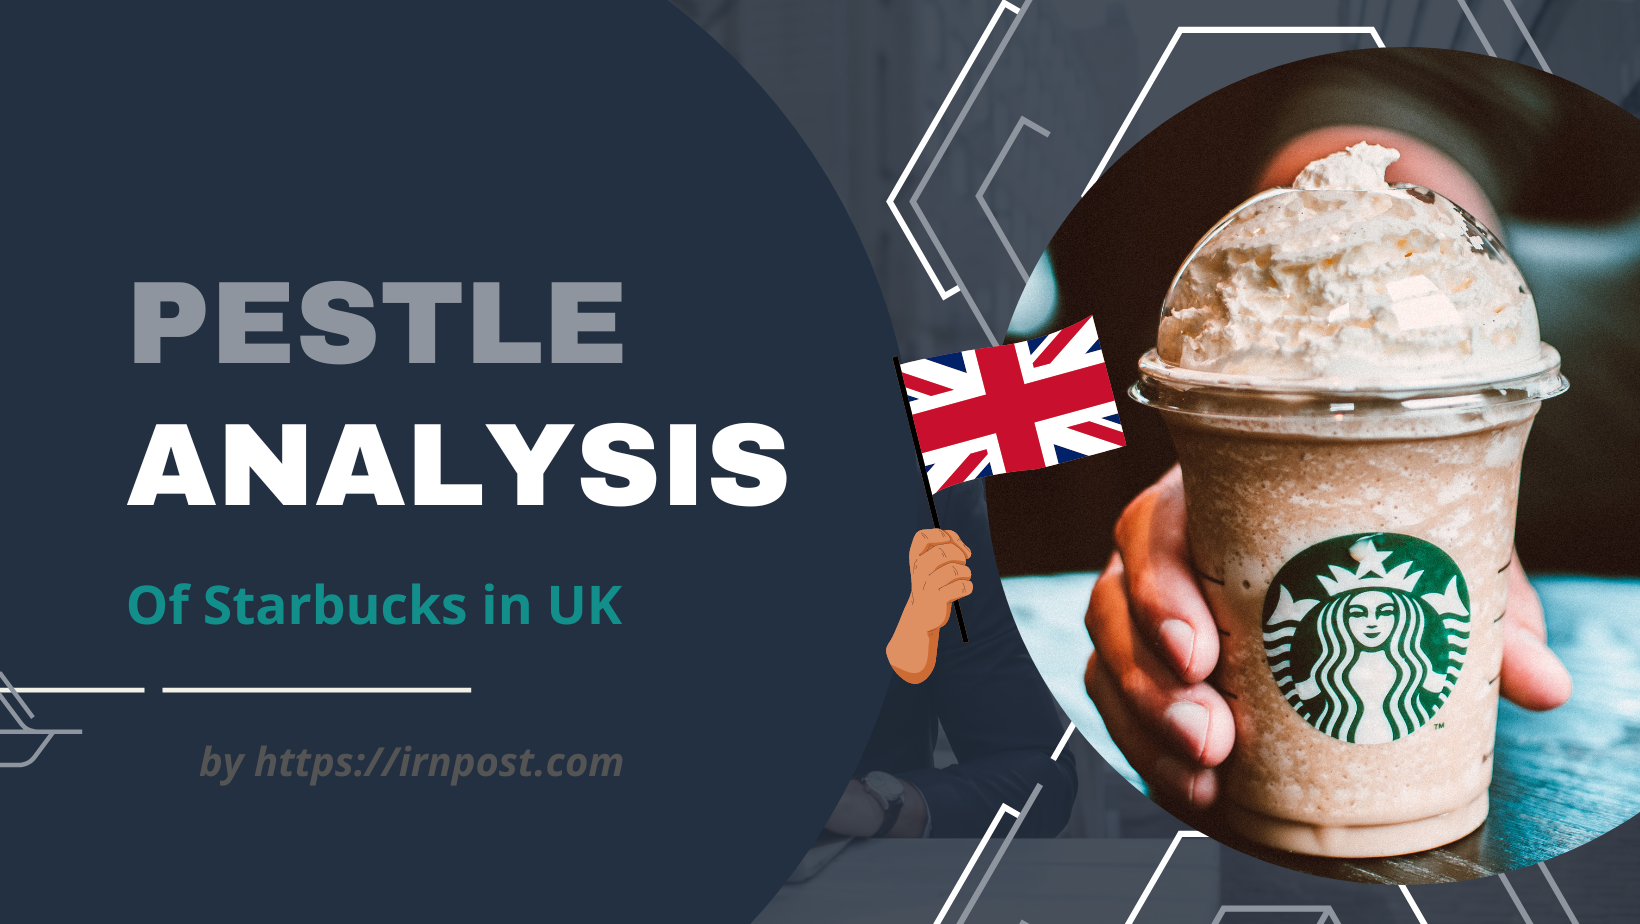 PESTLE Analysis of Starbucks in UK